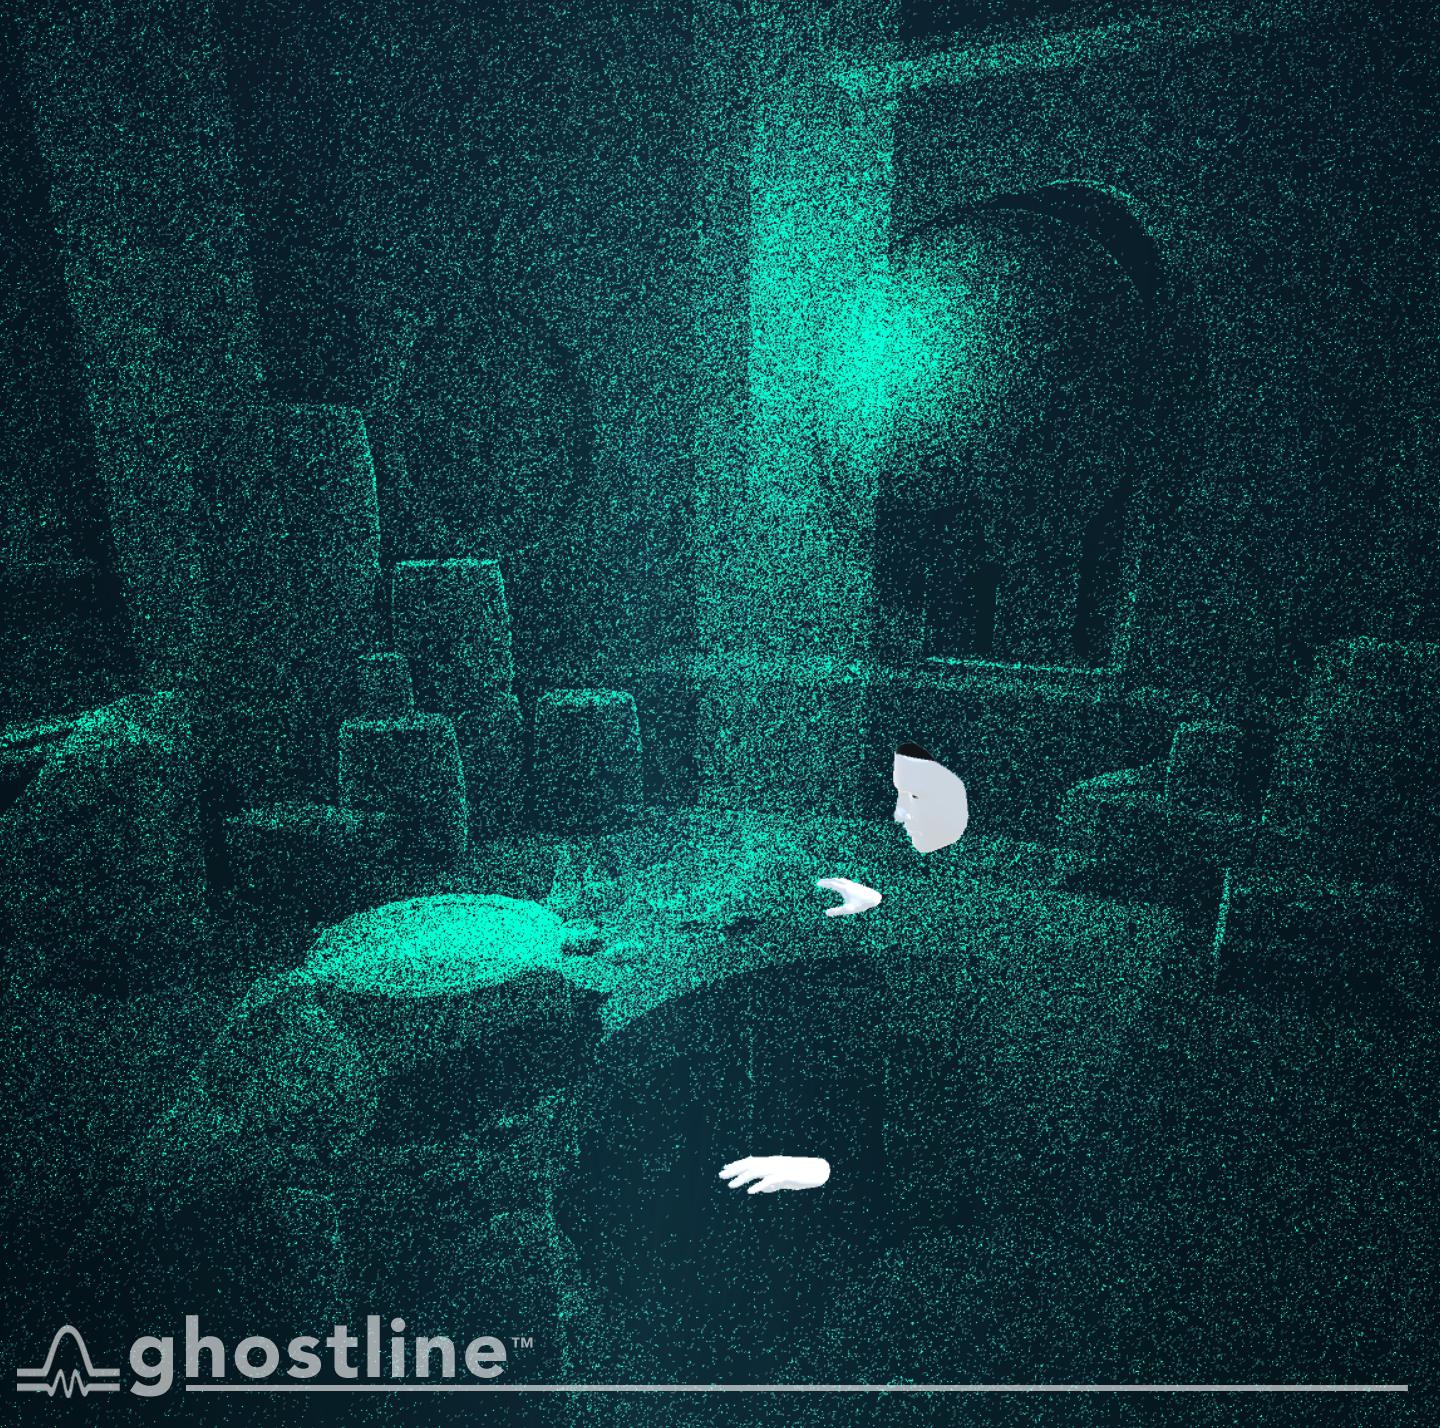 ghostline shot